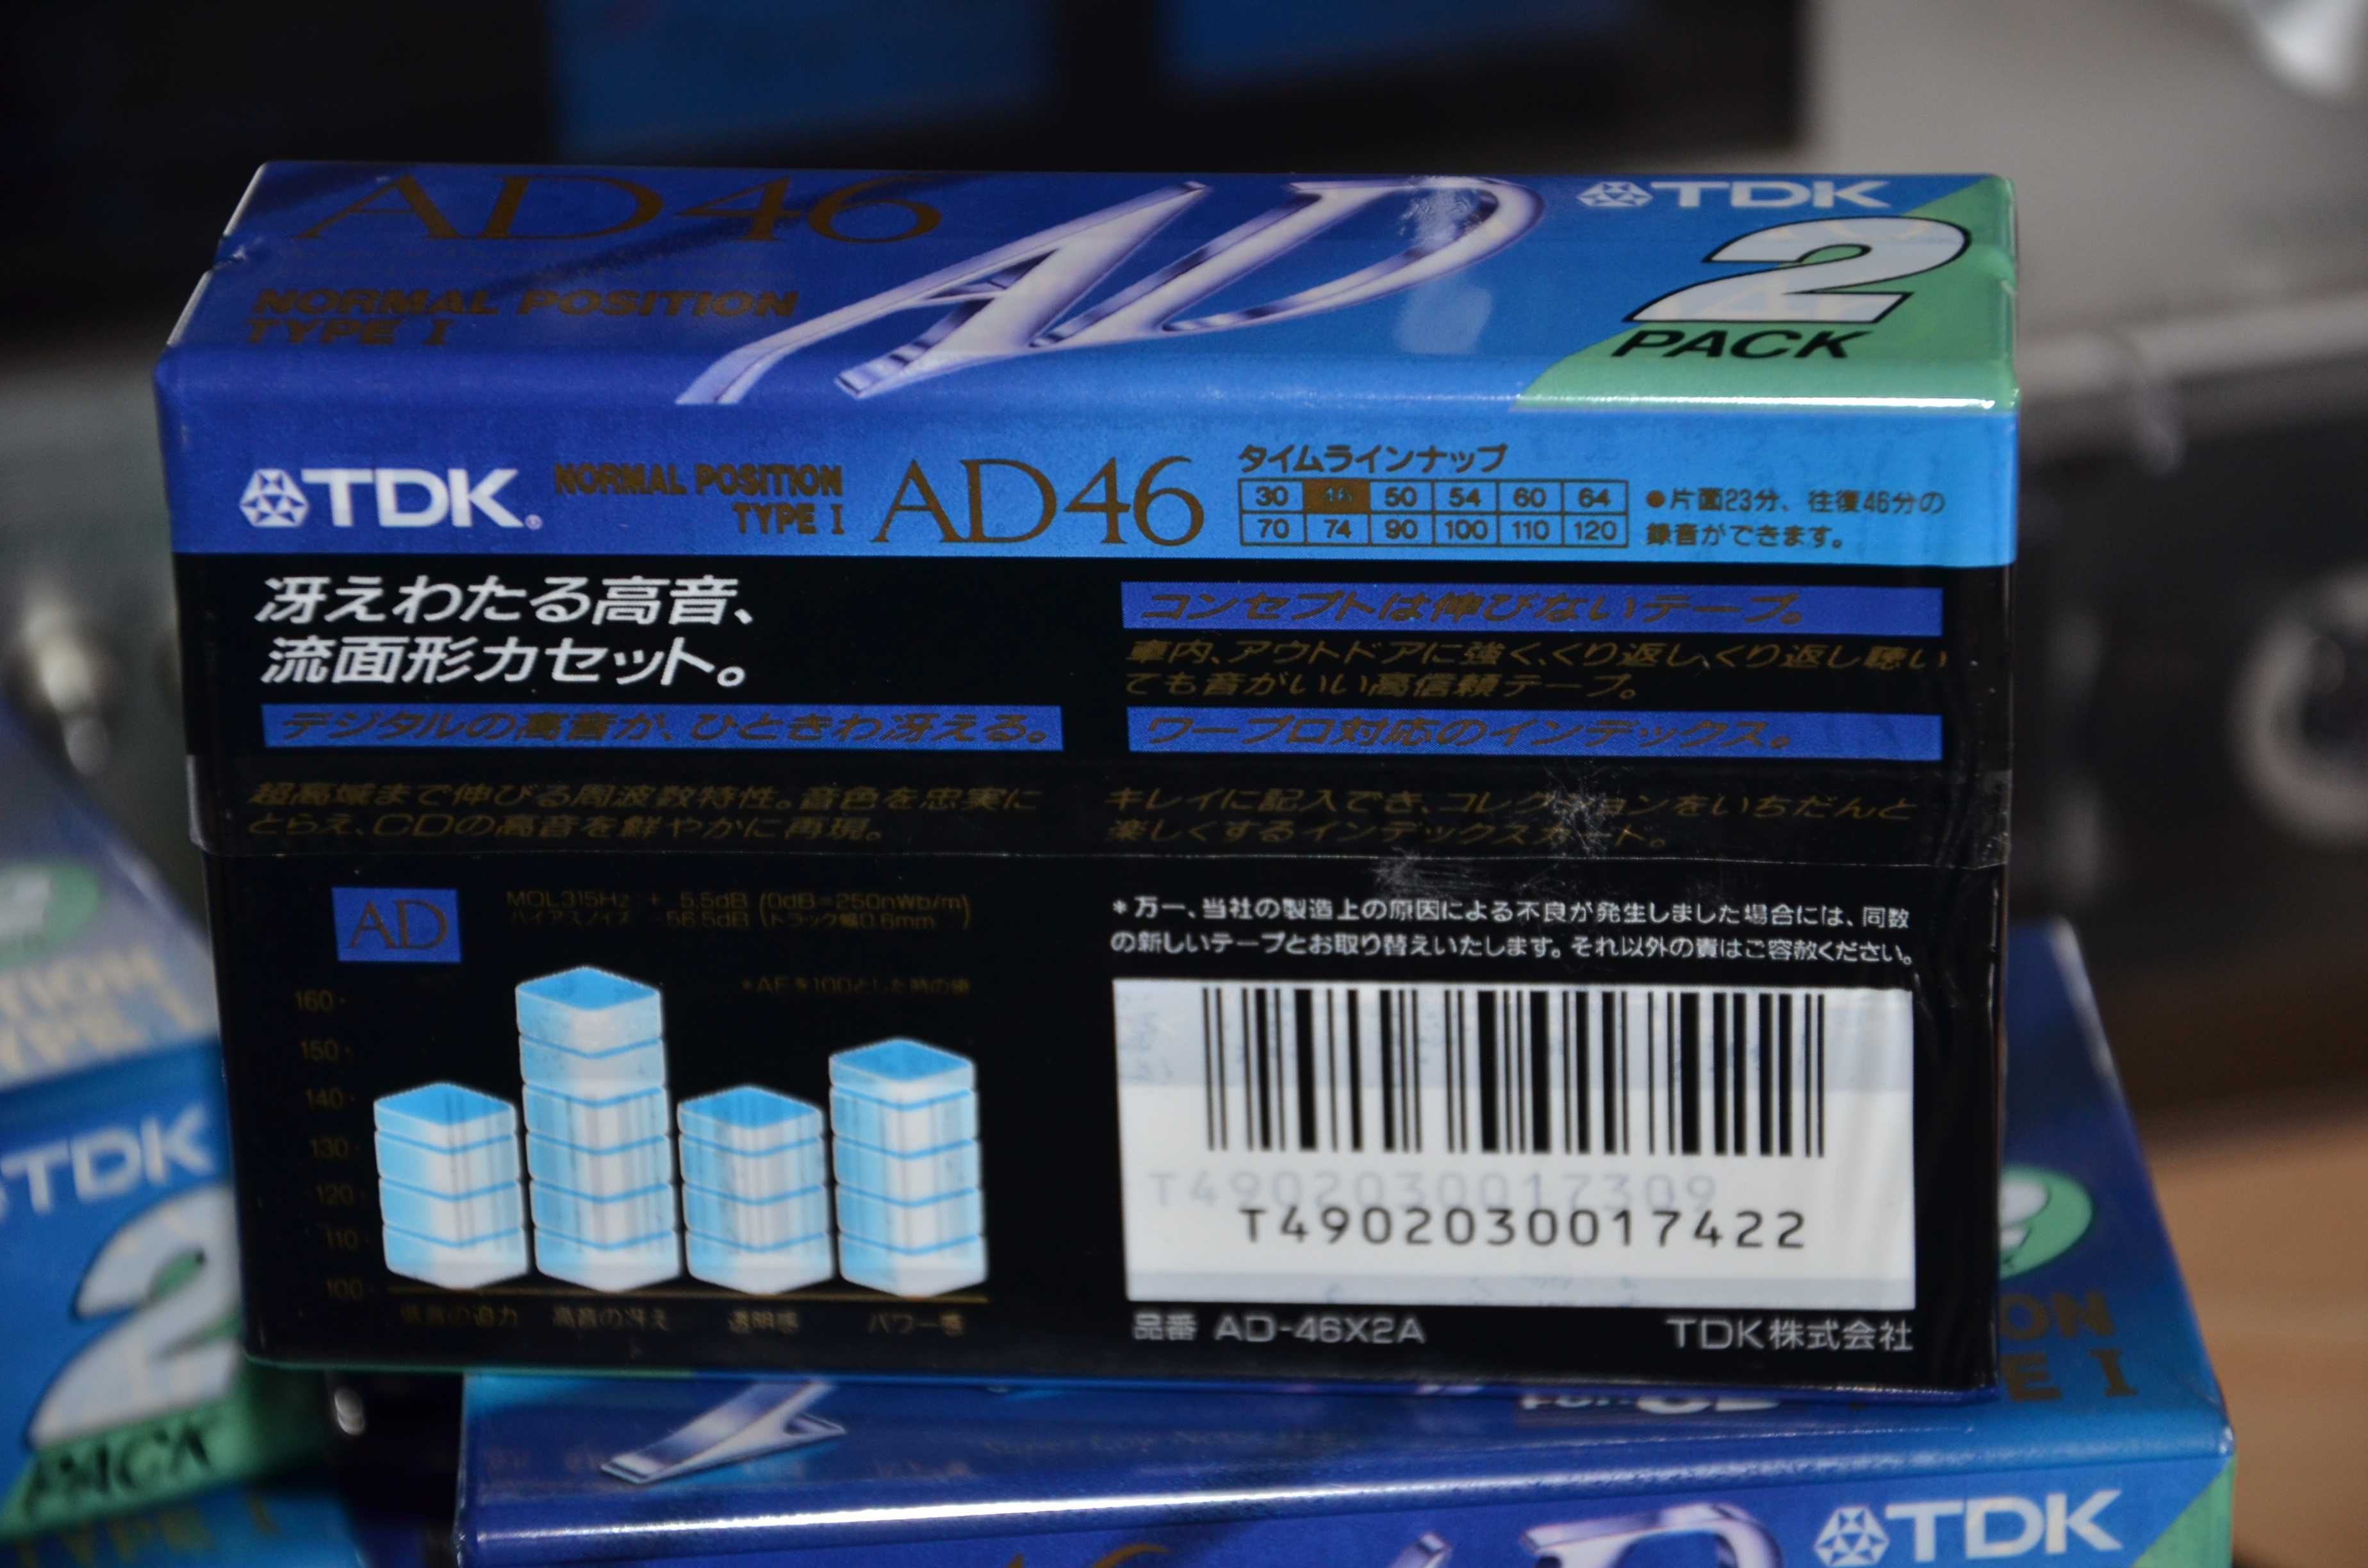 Новые аудиокассеты TDK AD46 Made in Japan and for Japan 1992